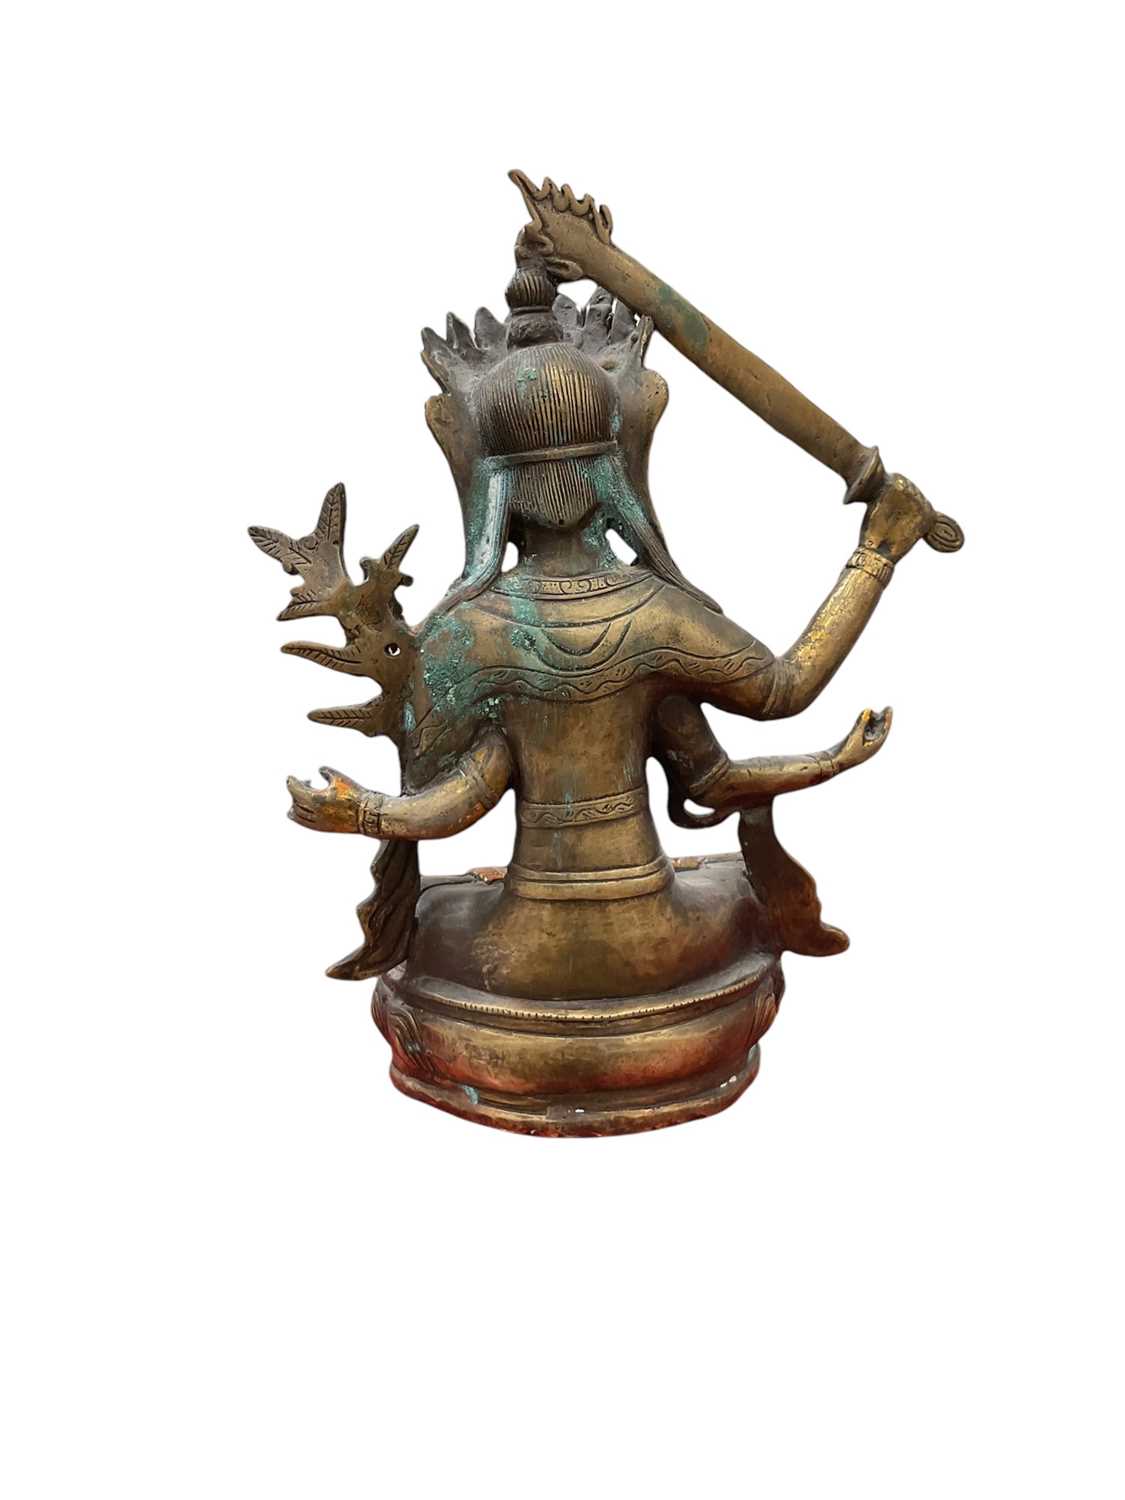 Tibetan brass Buddha, 28.5cm high - Image 2 of 3